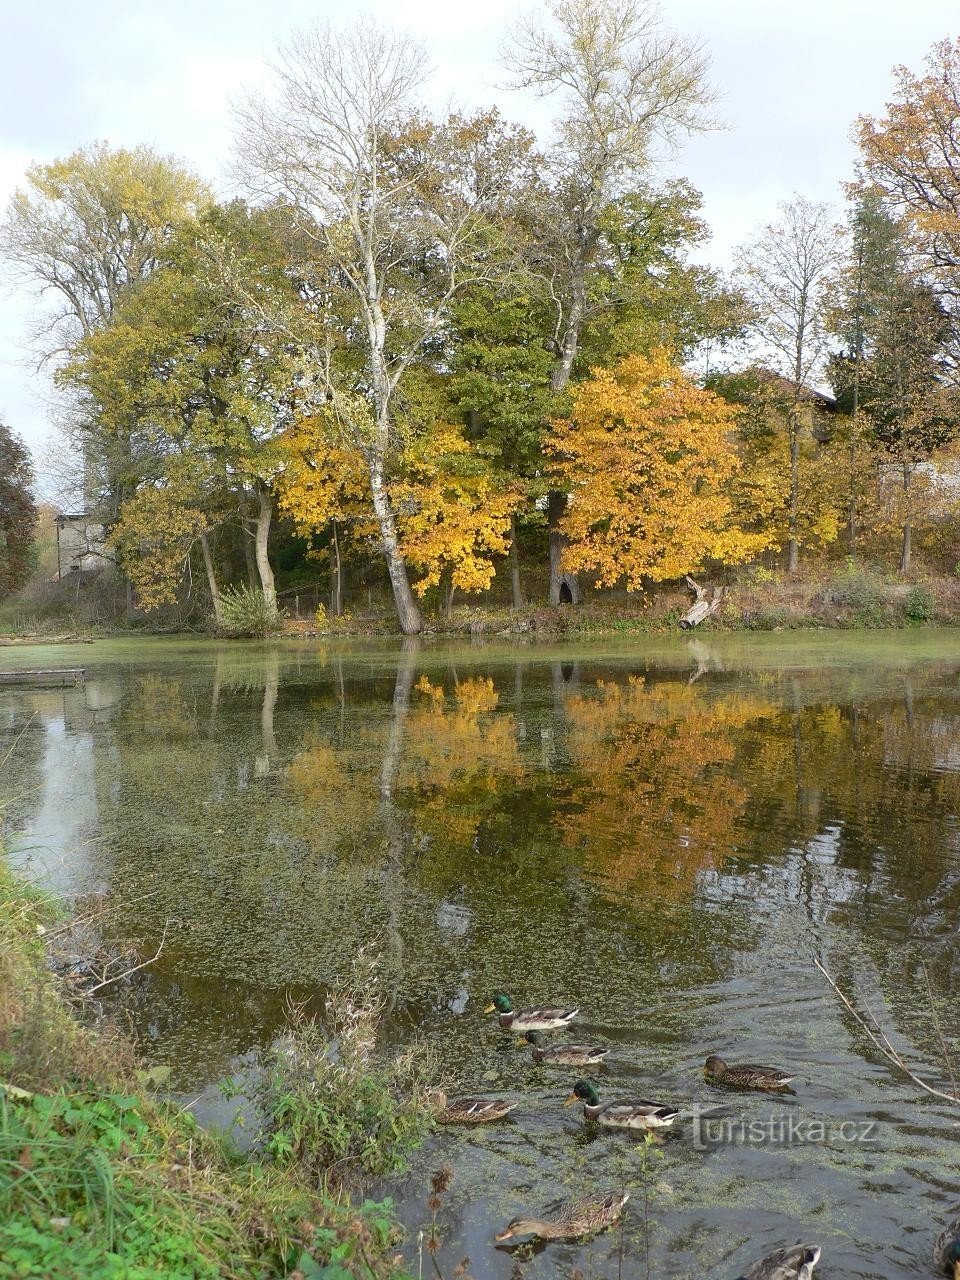 Лажаны, вид на парк и пруд